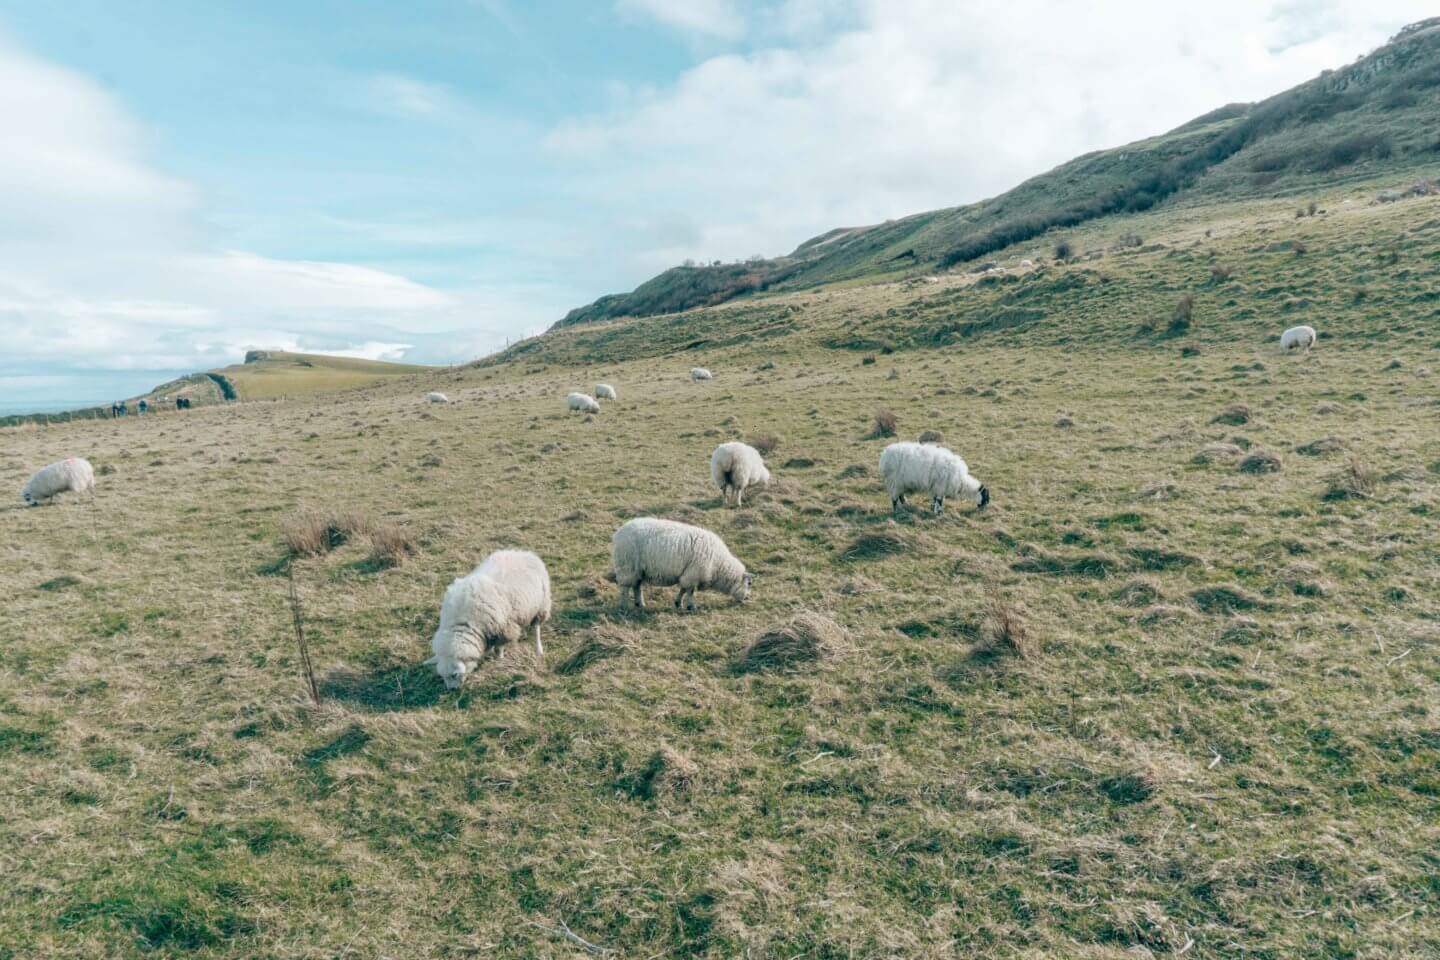 Irish Sheep on a grassy field in Ireland